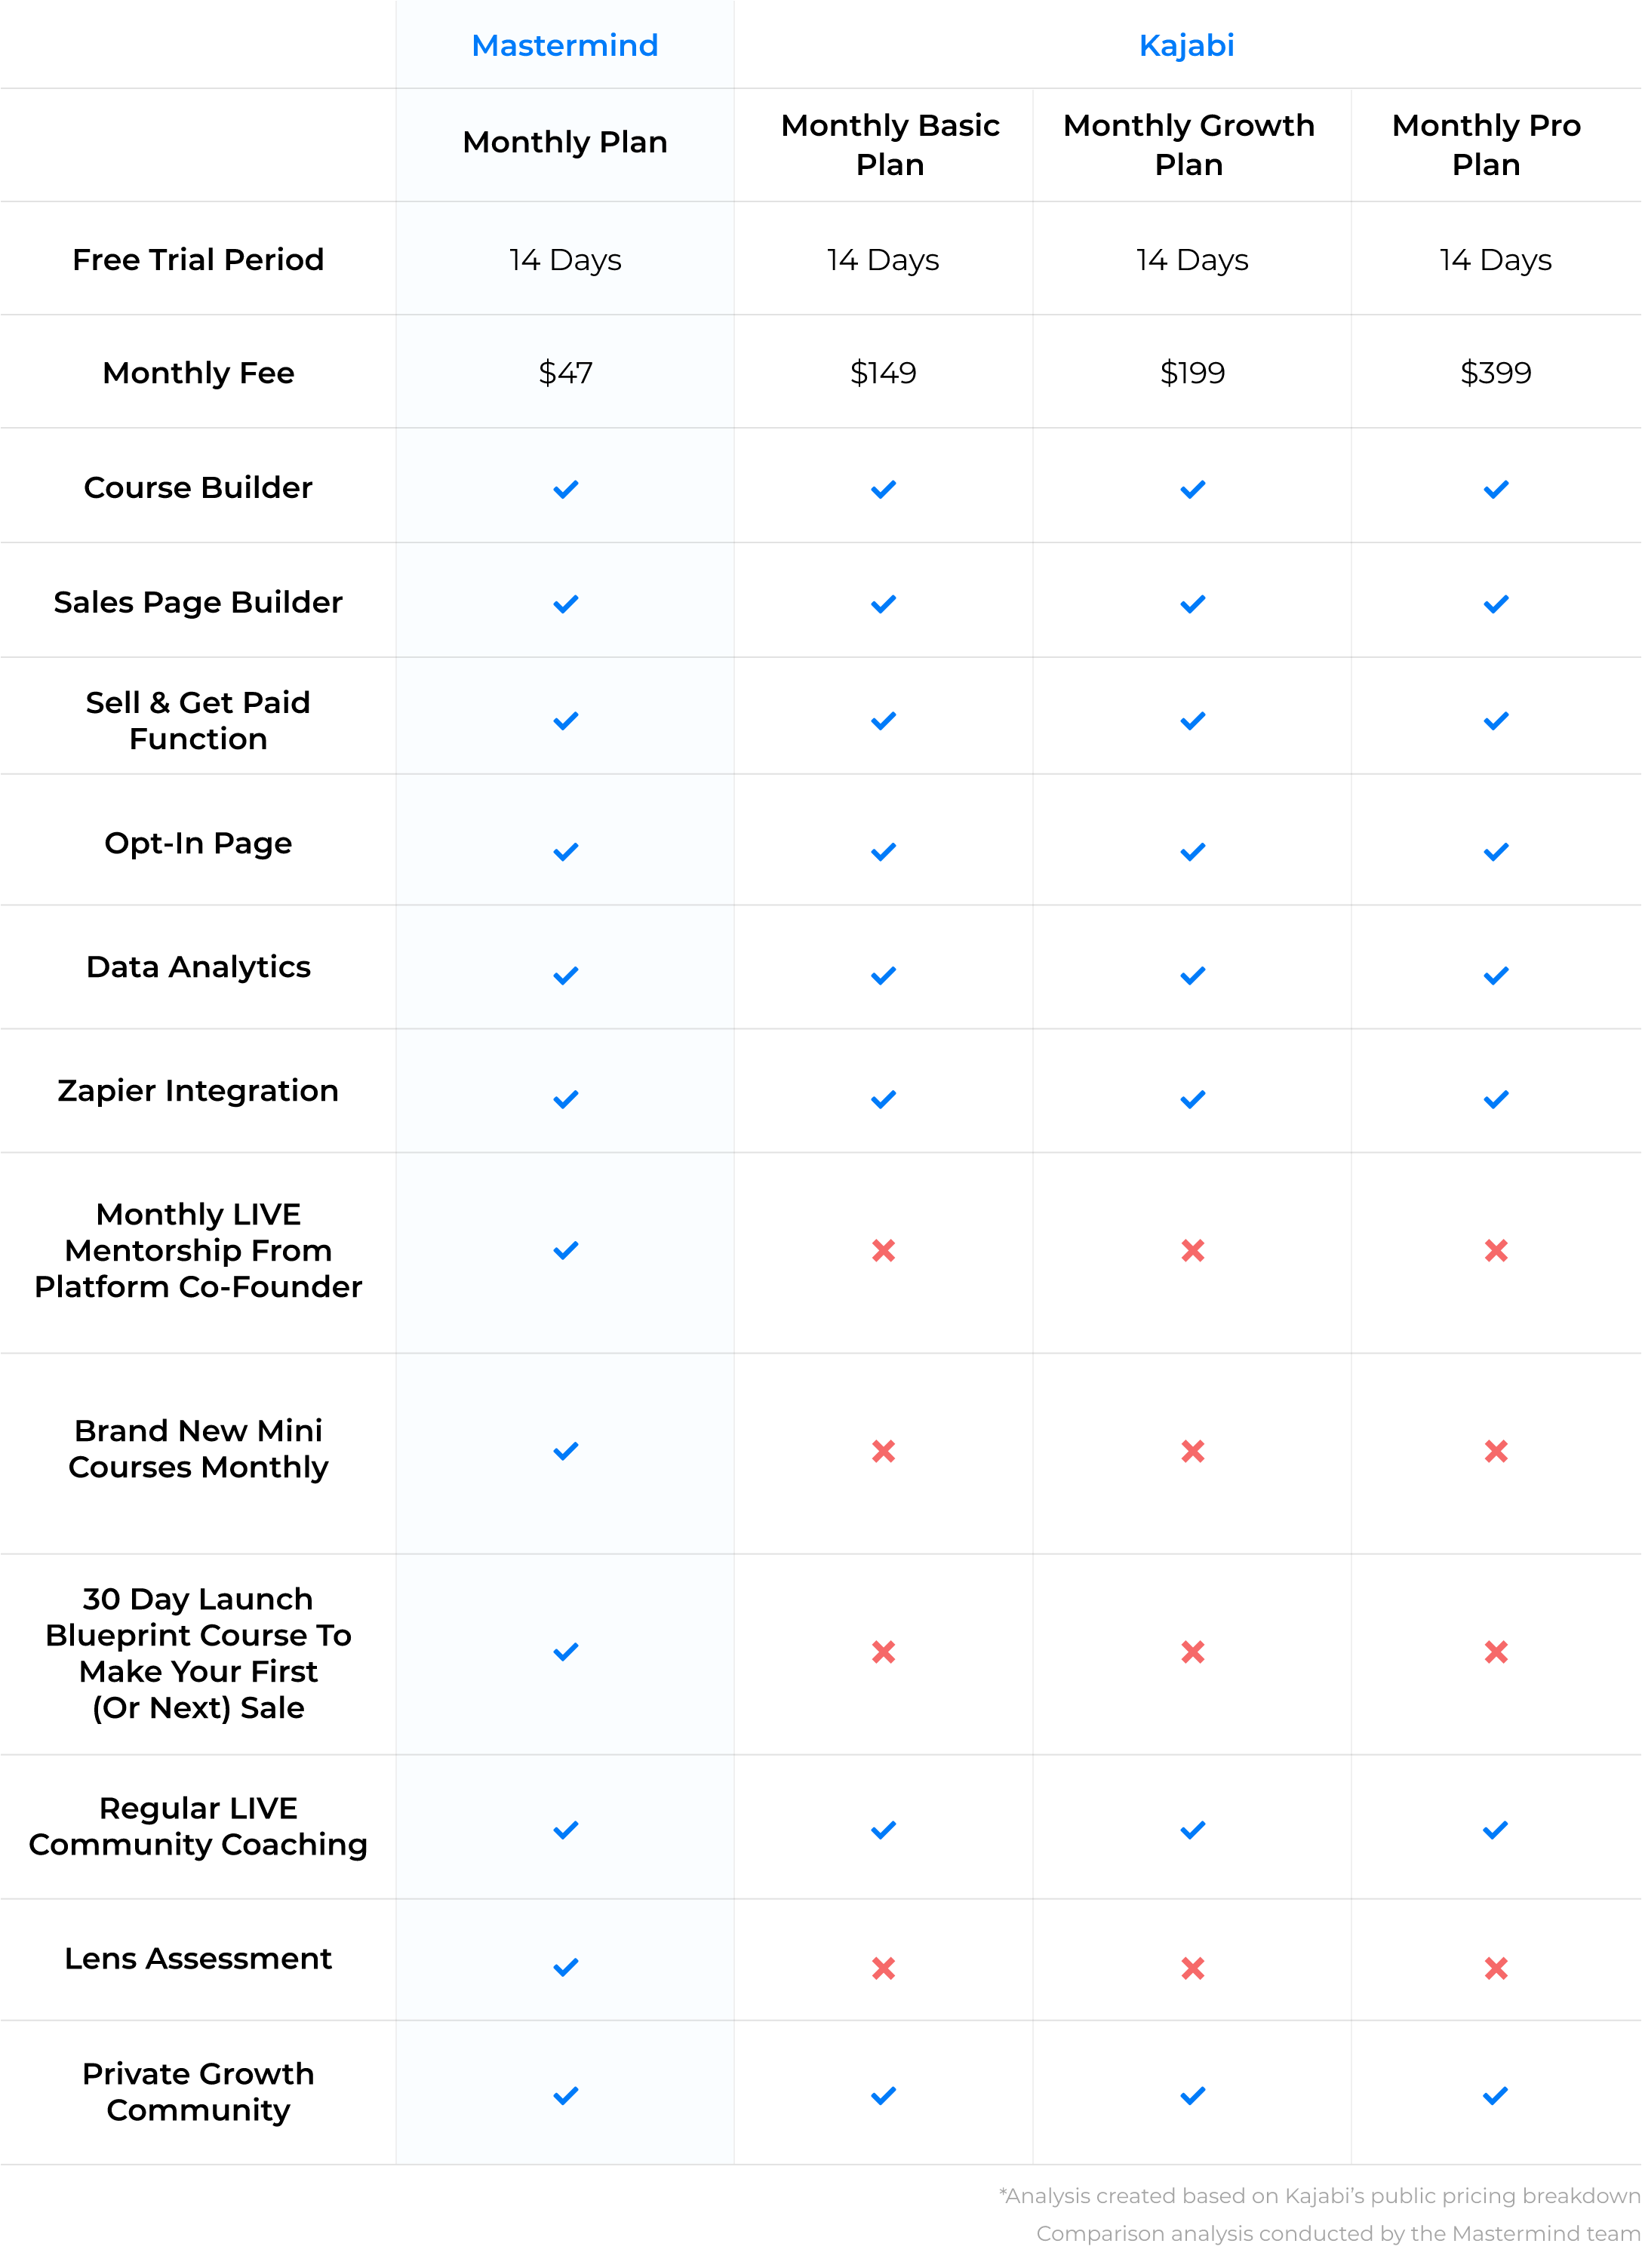 A comparison chart of service for Mastermind vs Kajabi